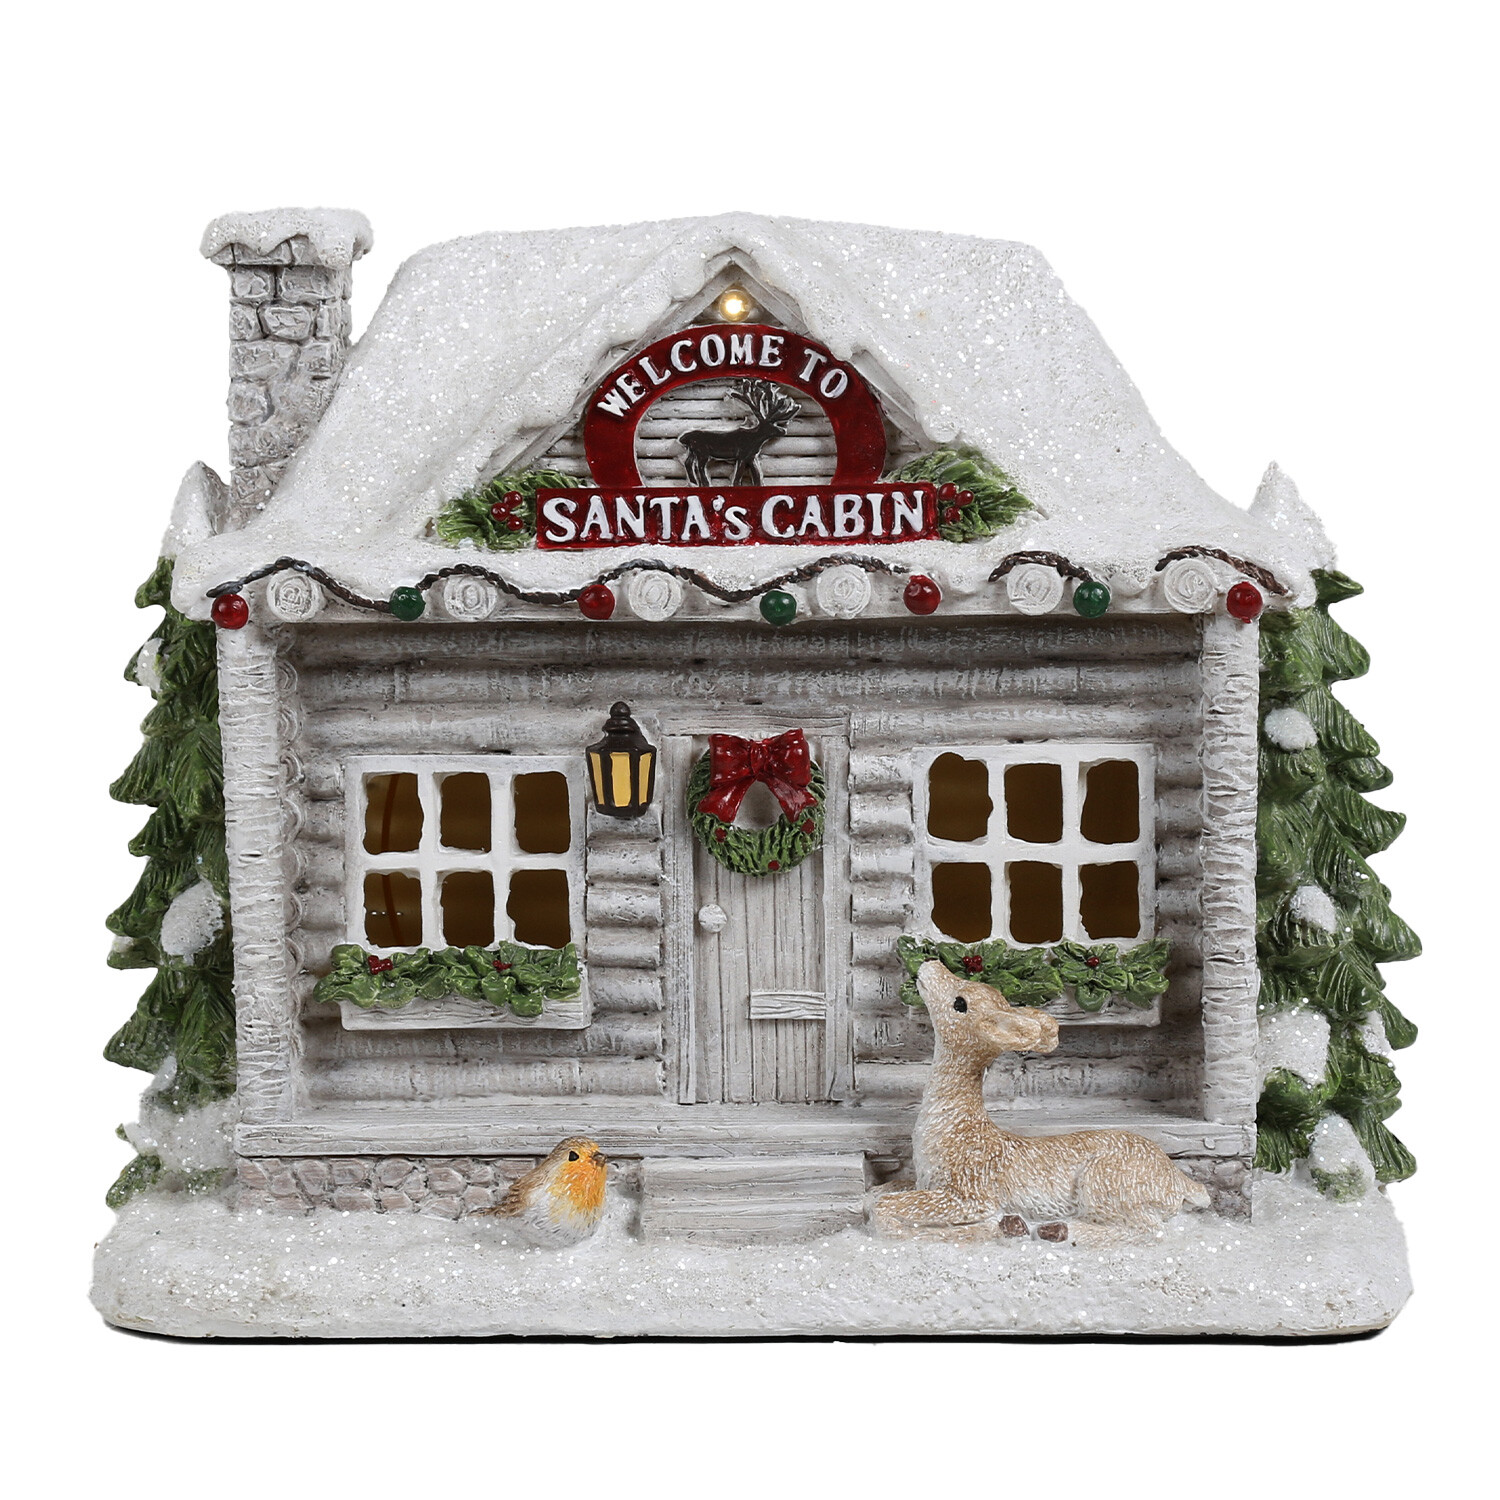 Santa's Cabin with LEDs - White Image 1